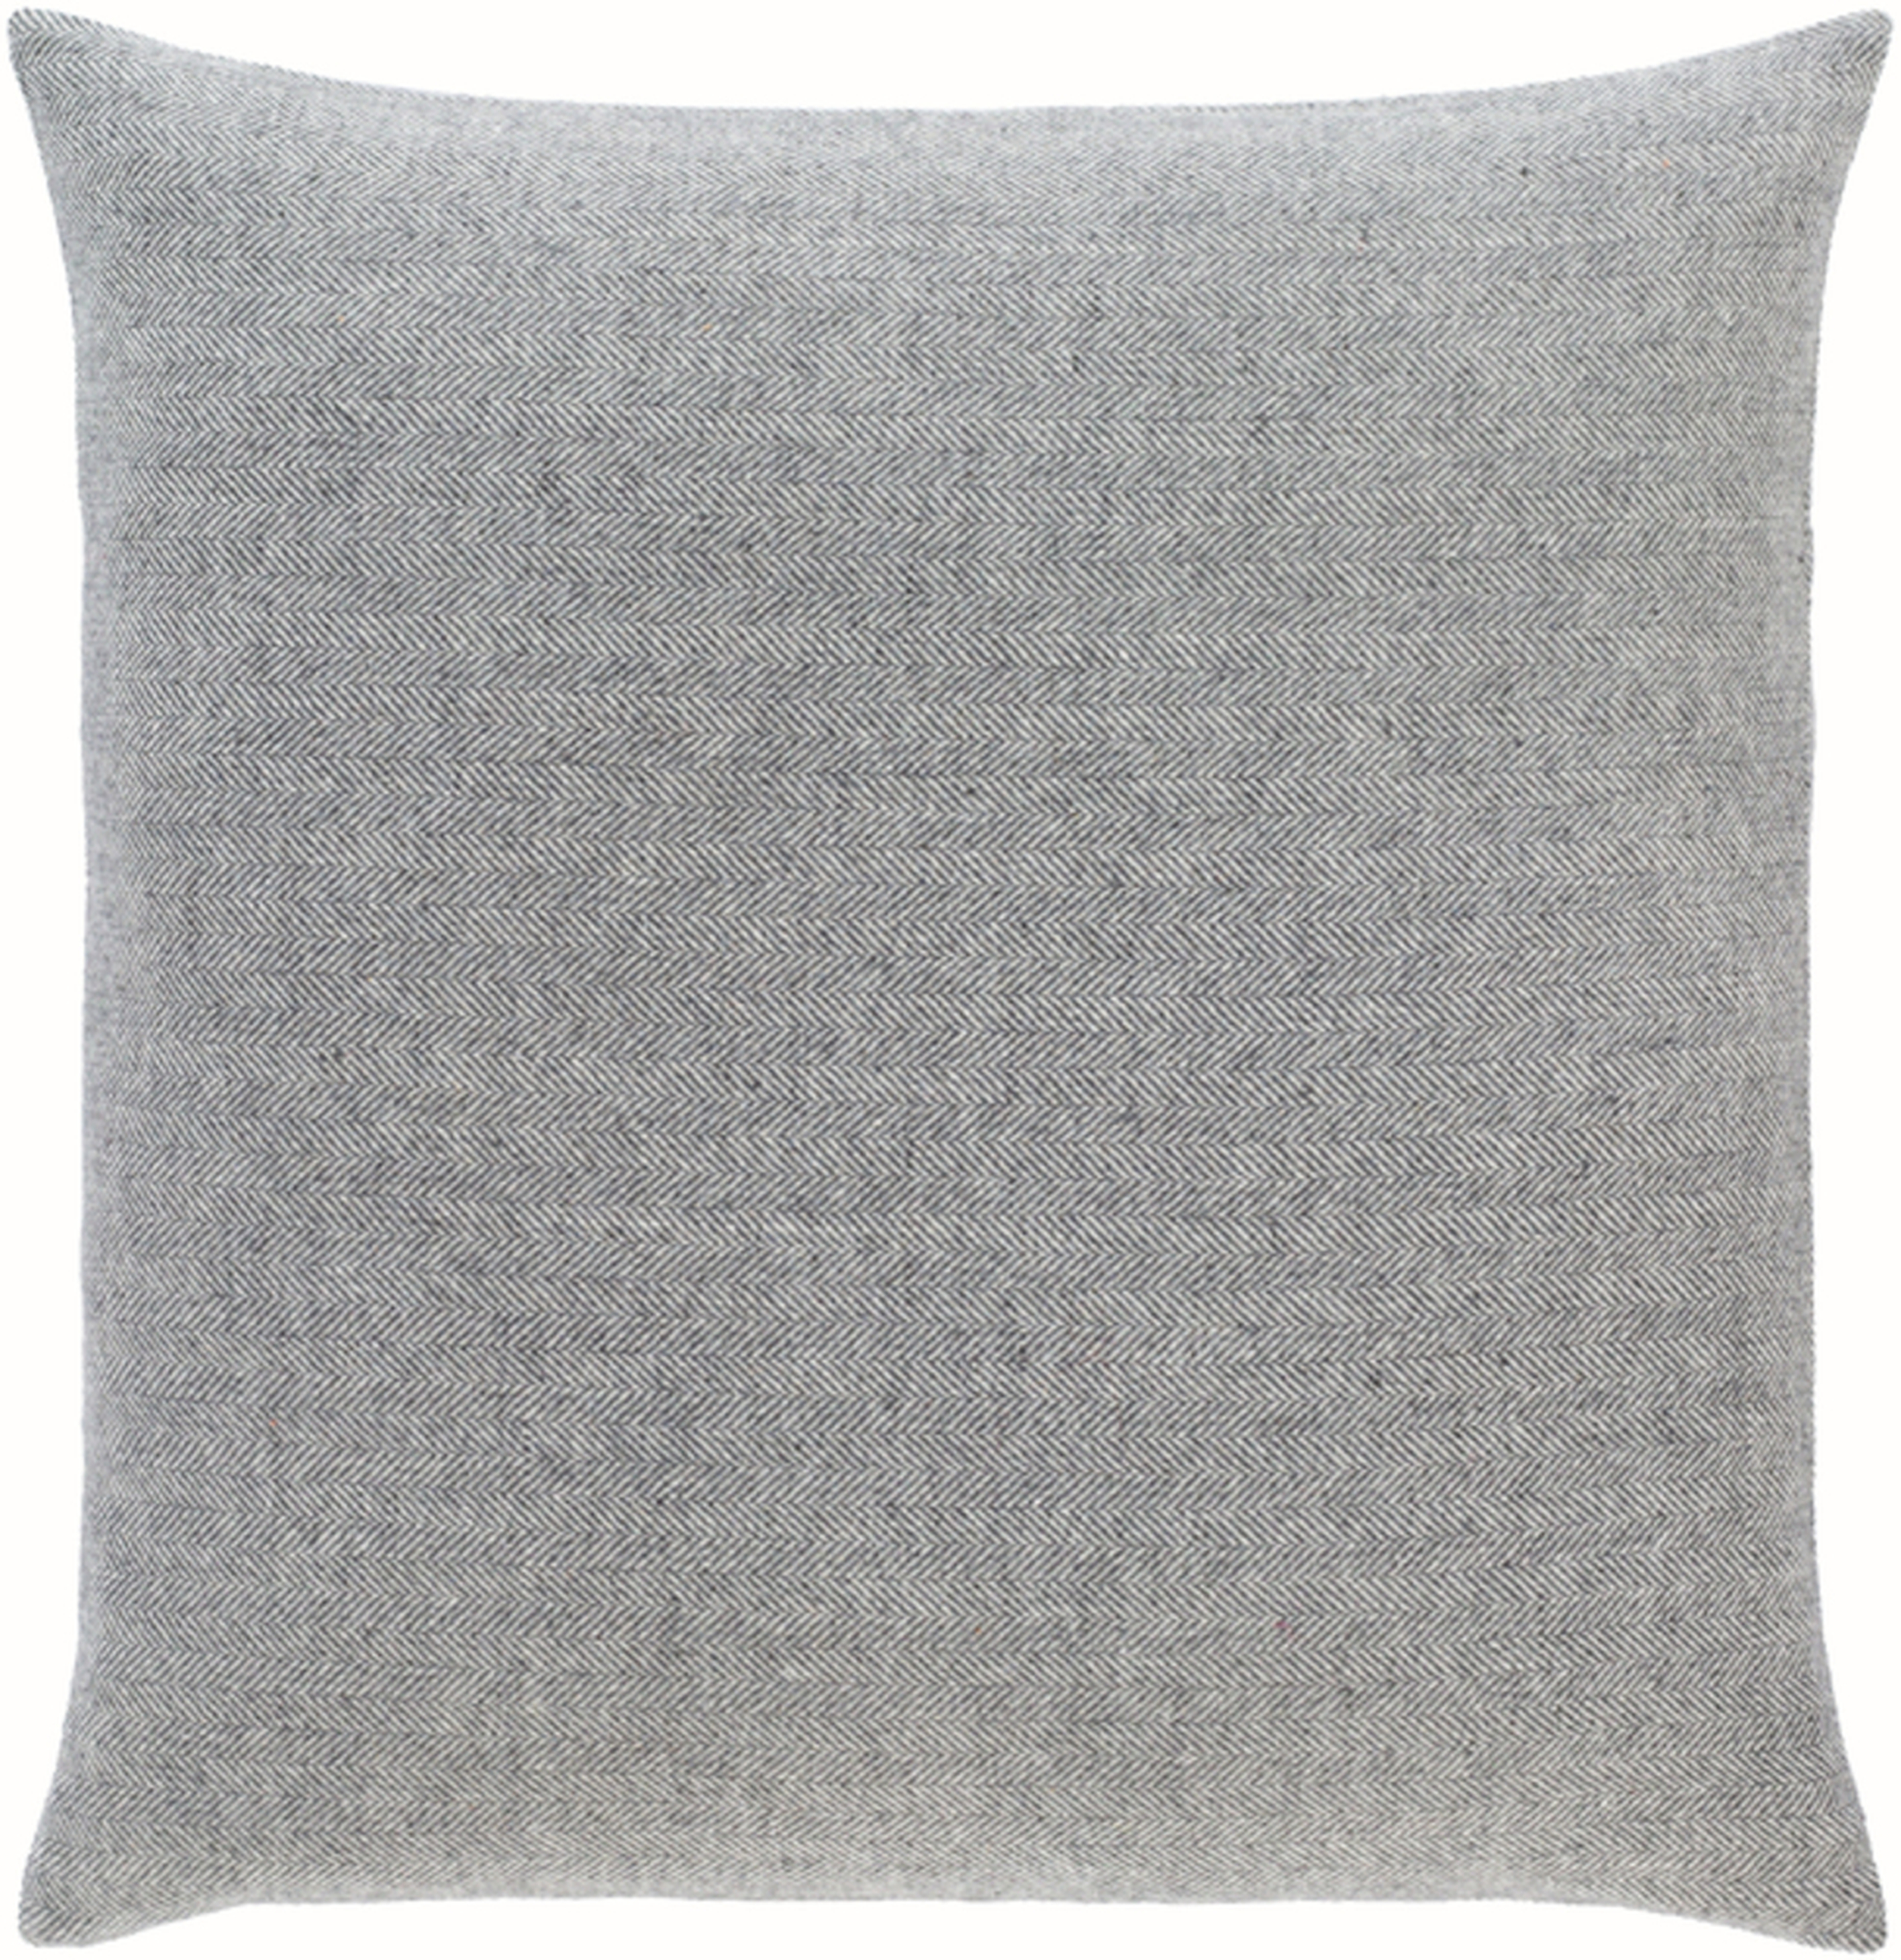 Wells Pillow, 22" x 22", Charcoal - Cove Goods